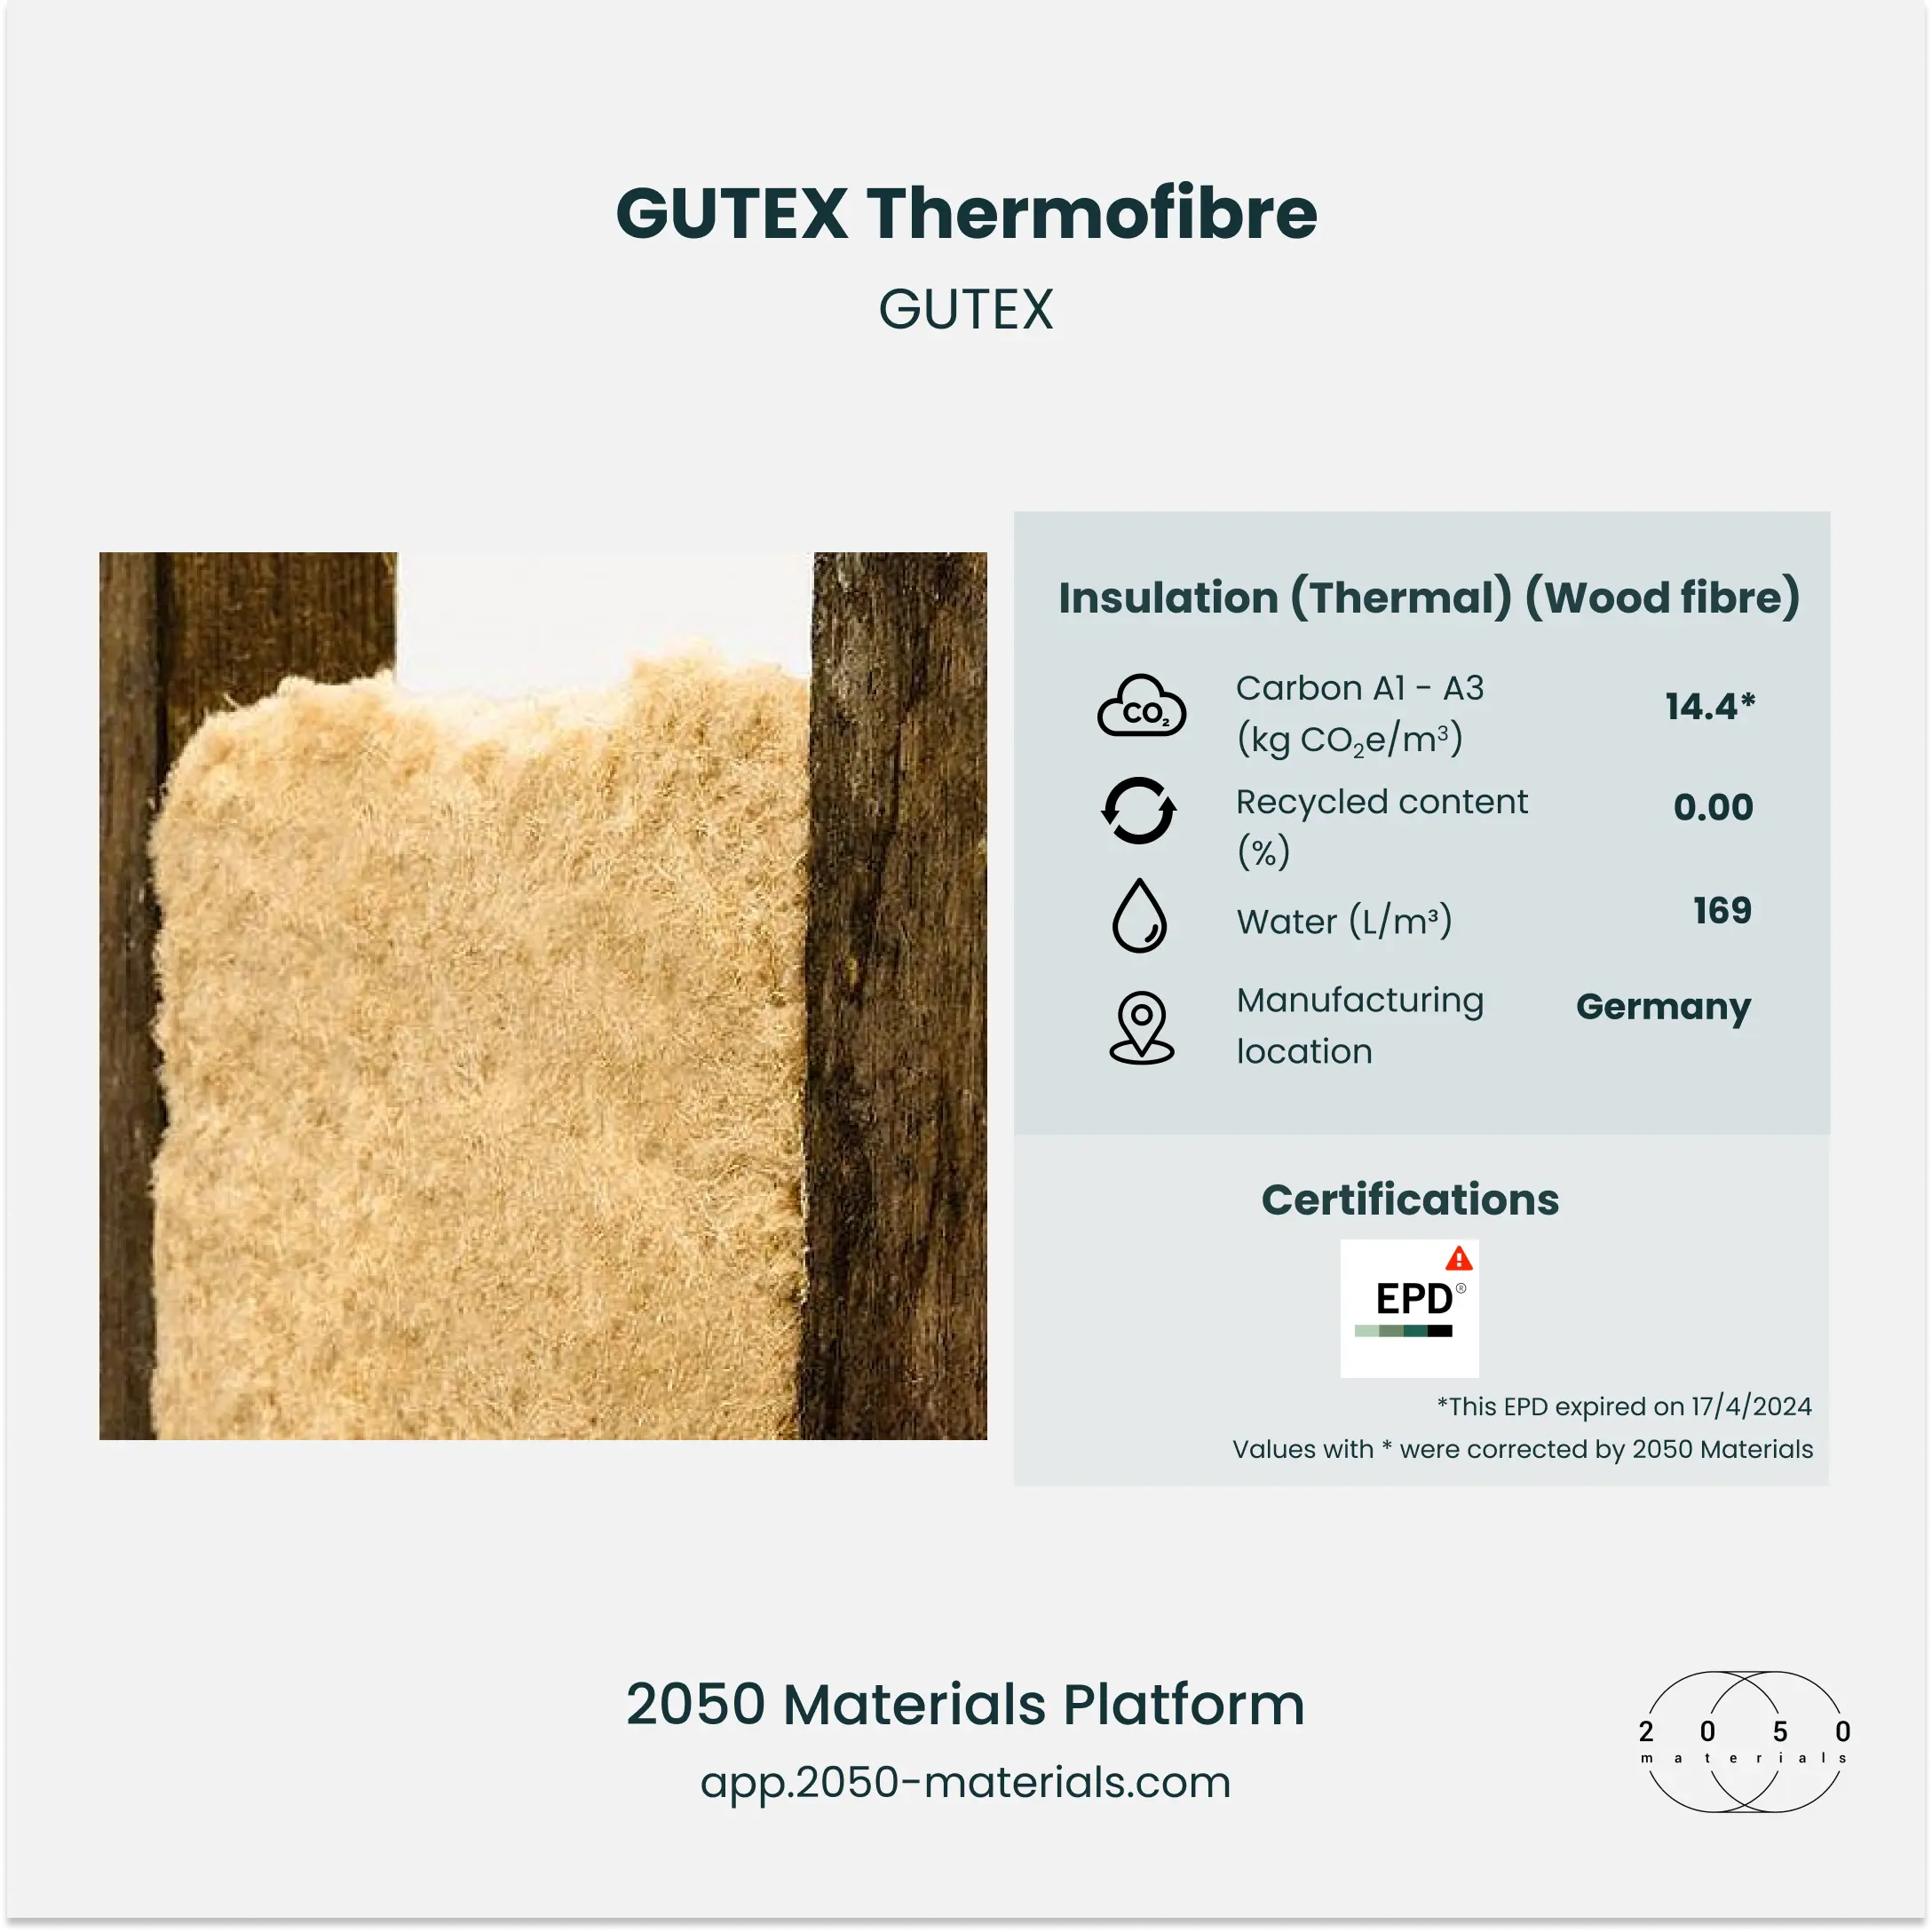 Gutex Thermofibre wood fiber insulation